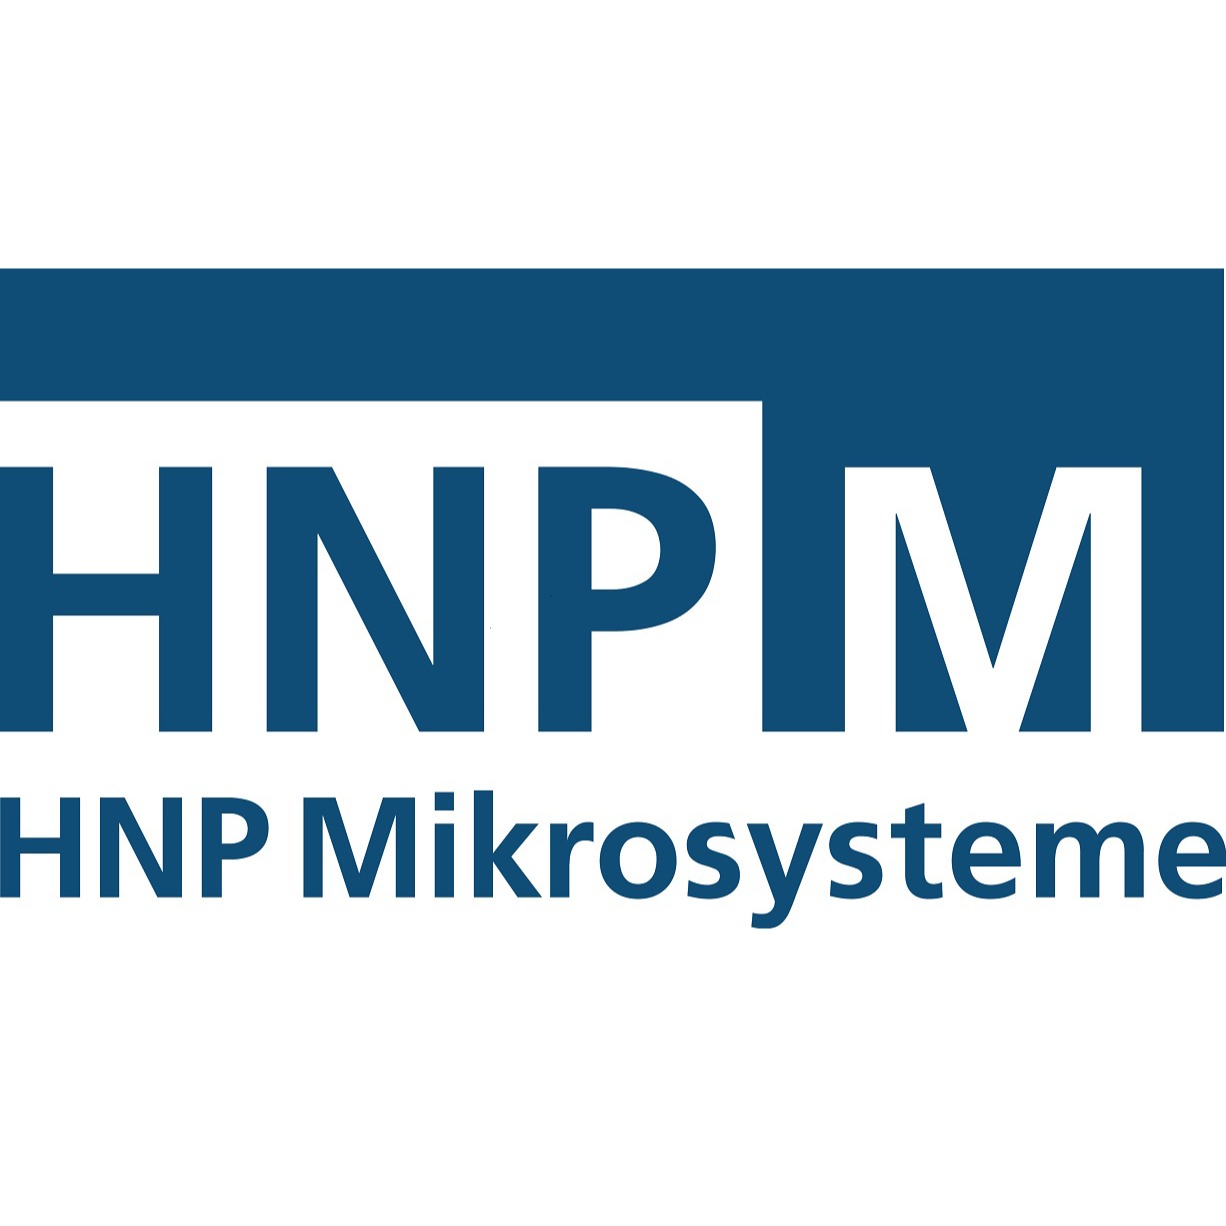 HNP MIKROSYSTEME